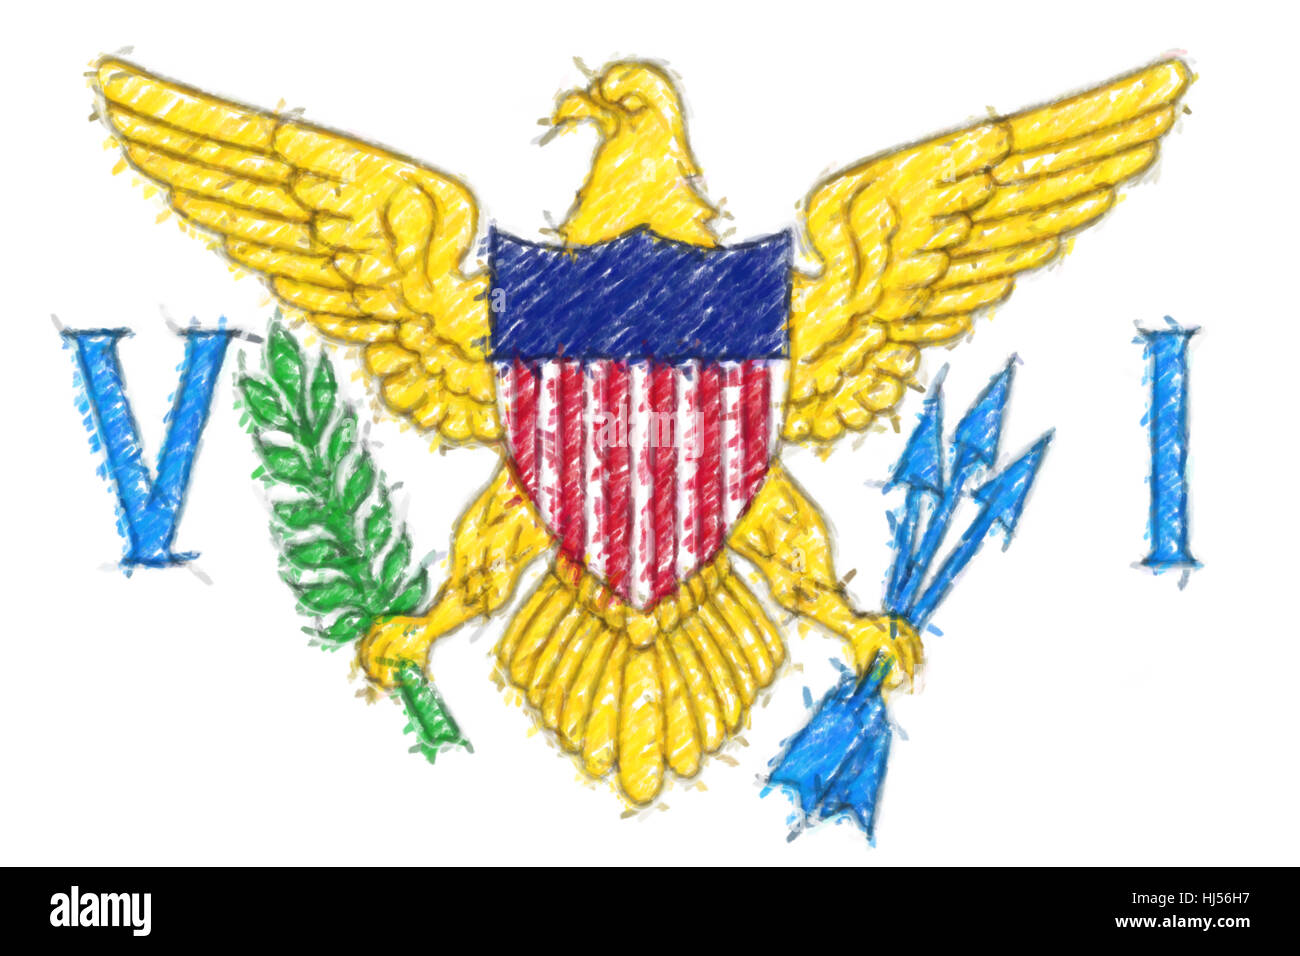 Flagge der Virgin Islands, US Hintergrundtextur o Farbe Wachsmalkreide-Effekt. Stockfoto